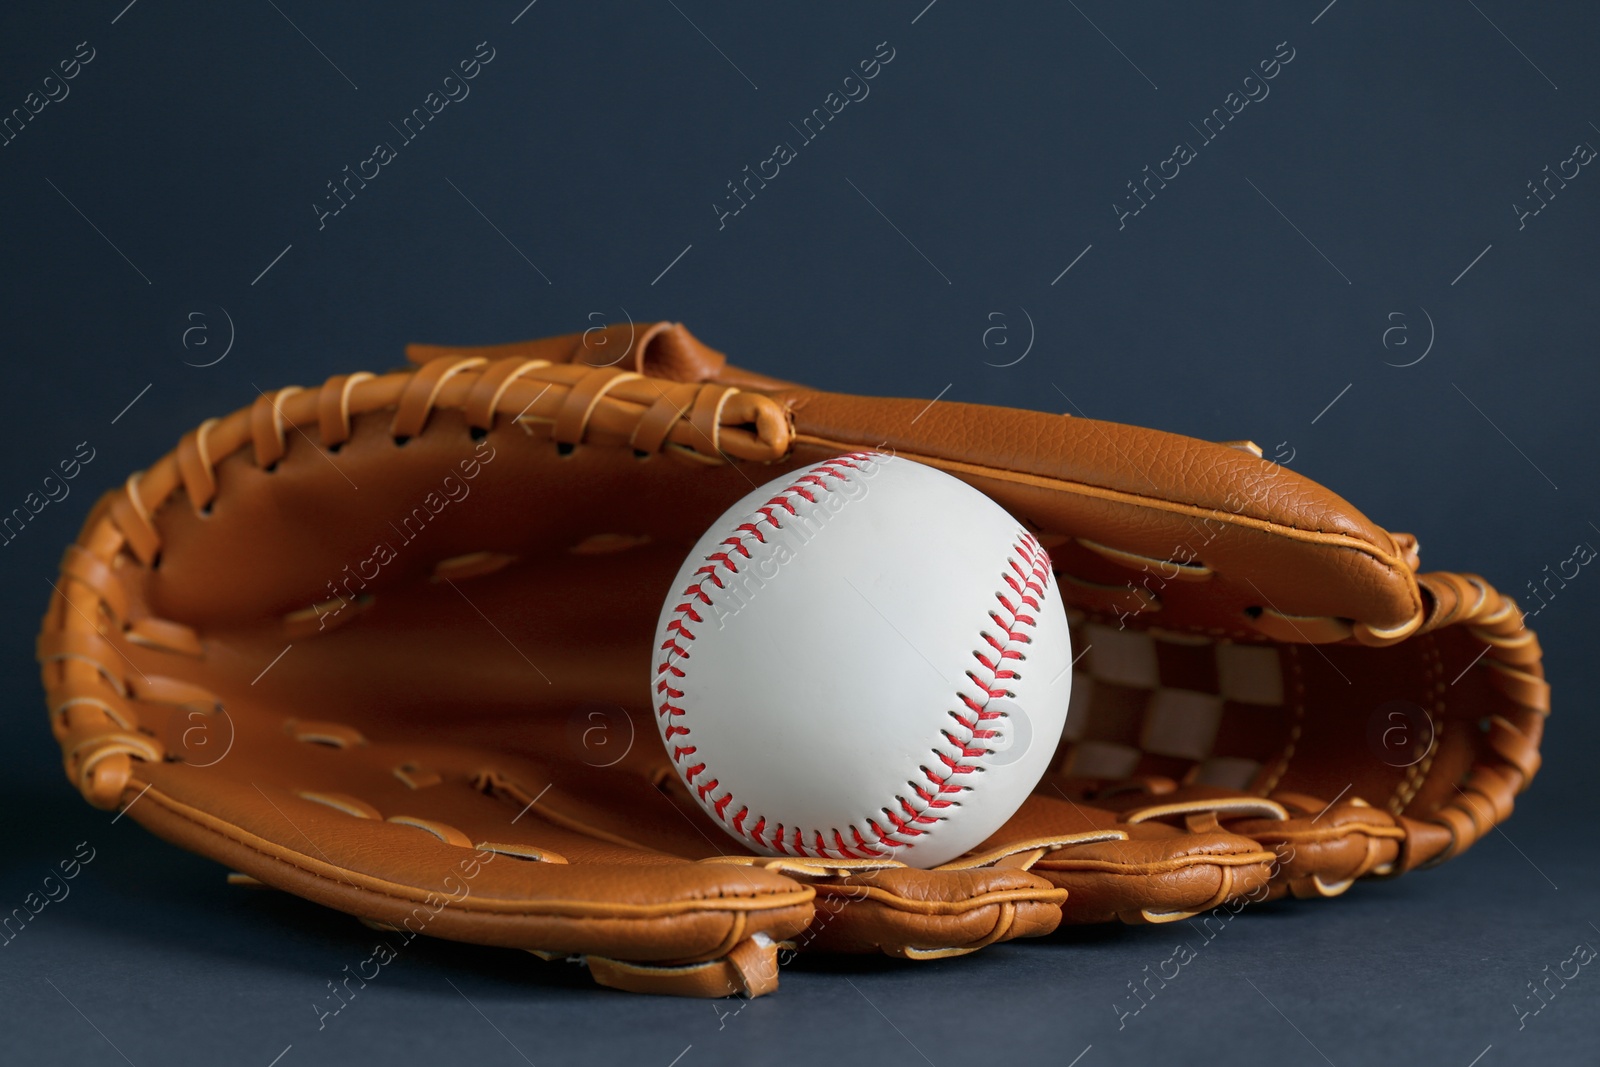 Photo of Catcher's mitt and baseball ball on dark background. Sports game